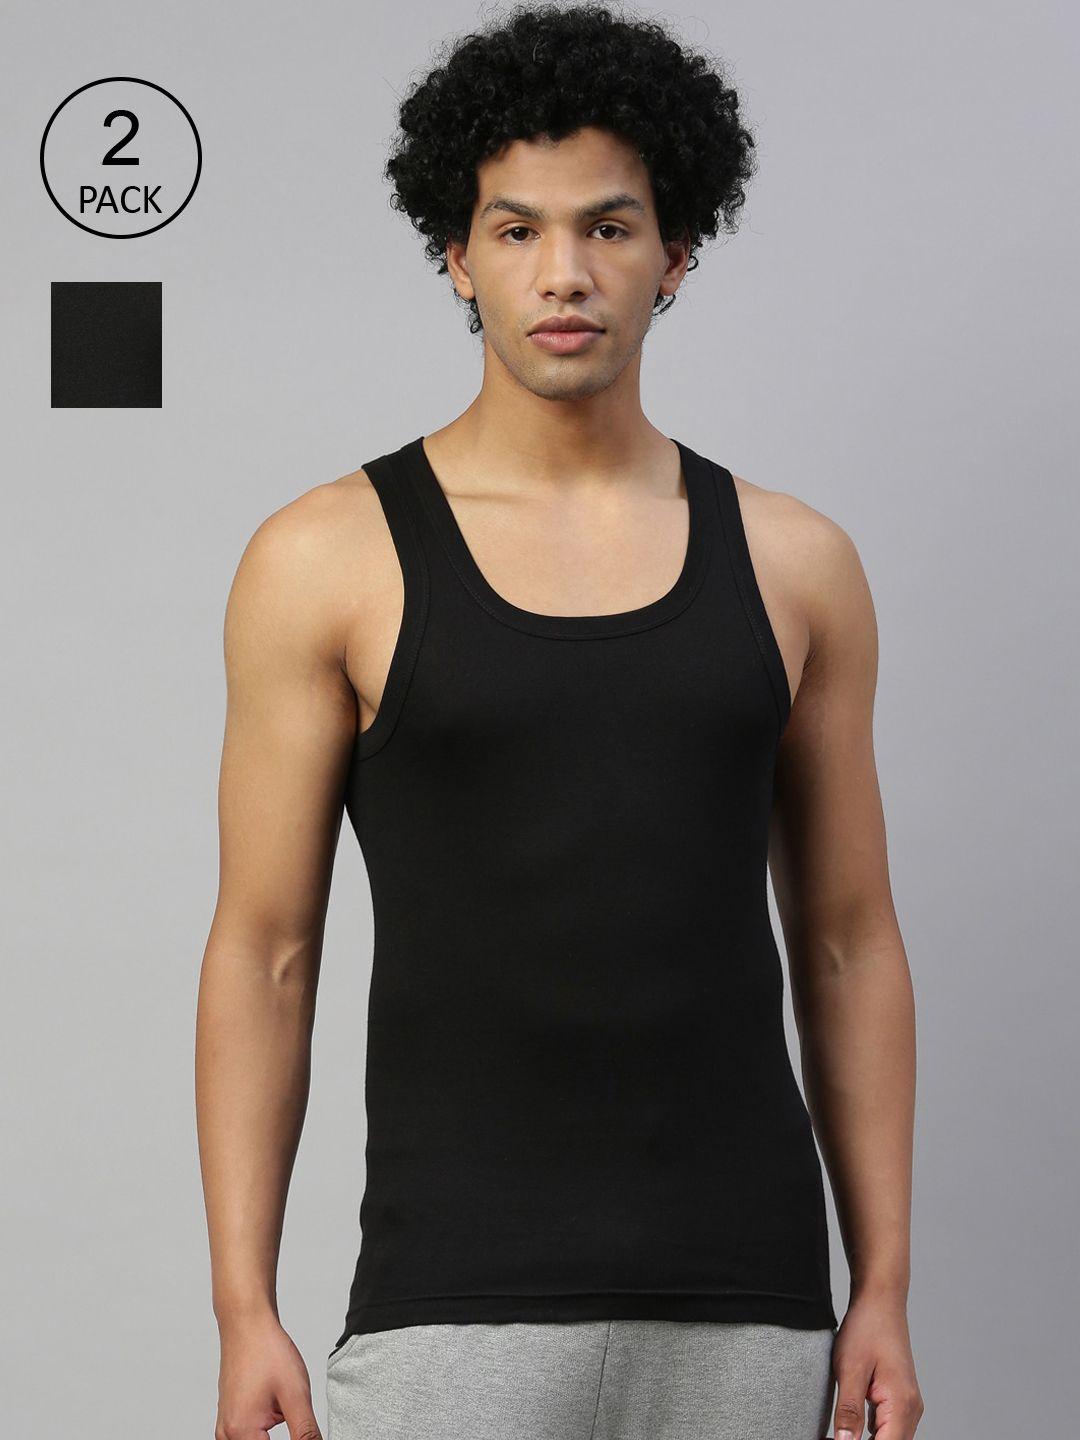 dixcy-scott-maximus-men-pack-of-2-black-pure-cotton-innerwear-vests